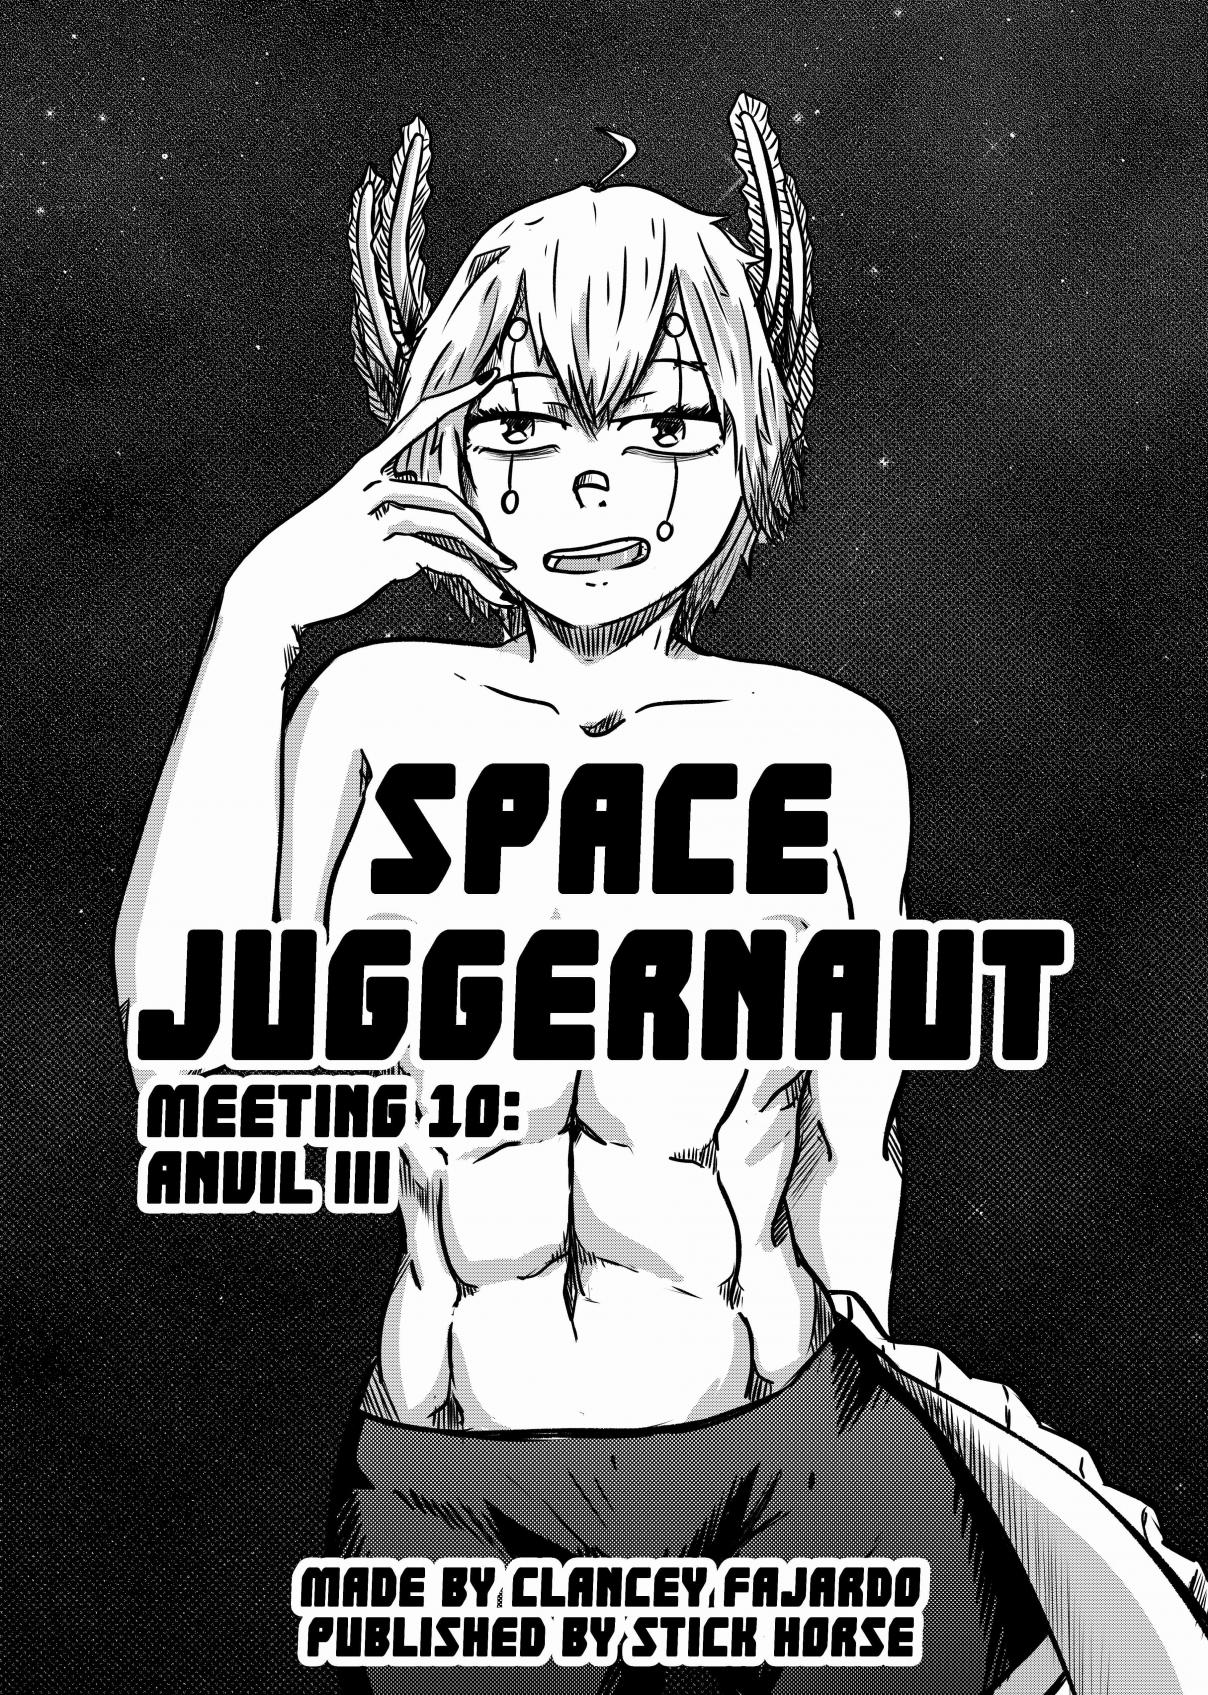 Space Juggernaut 10